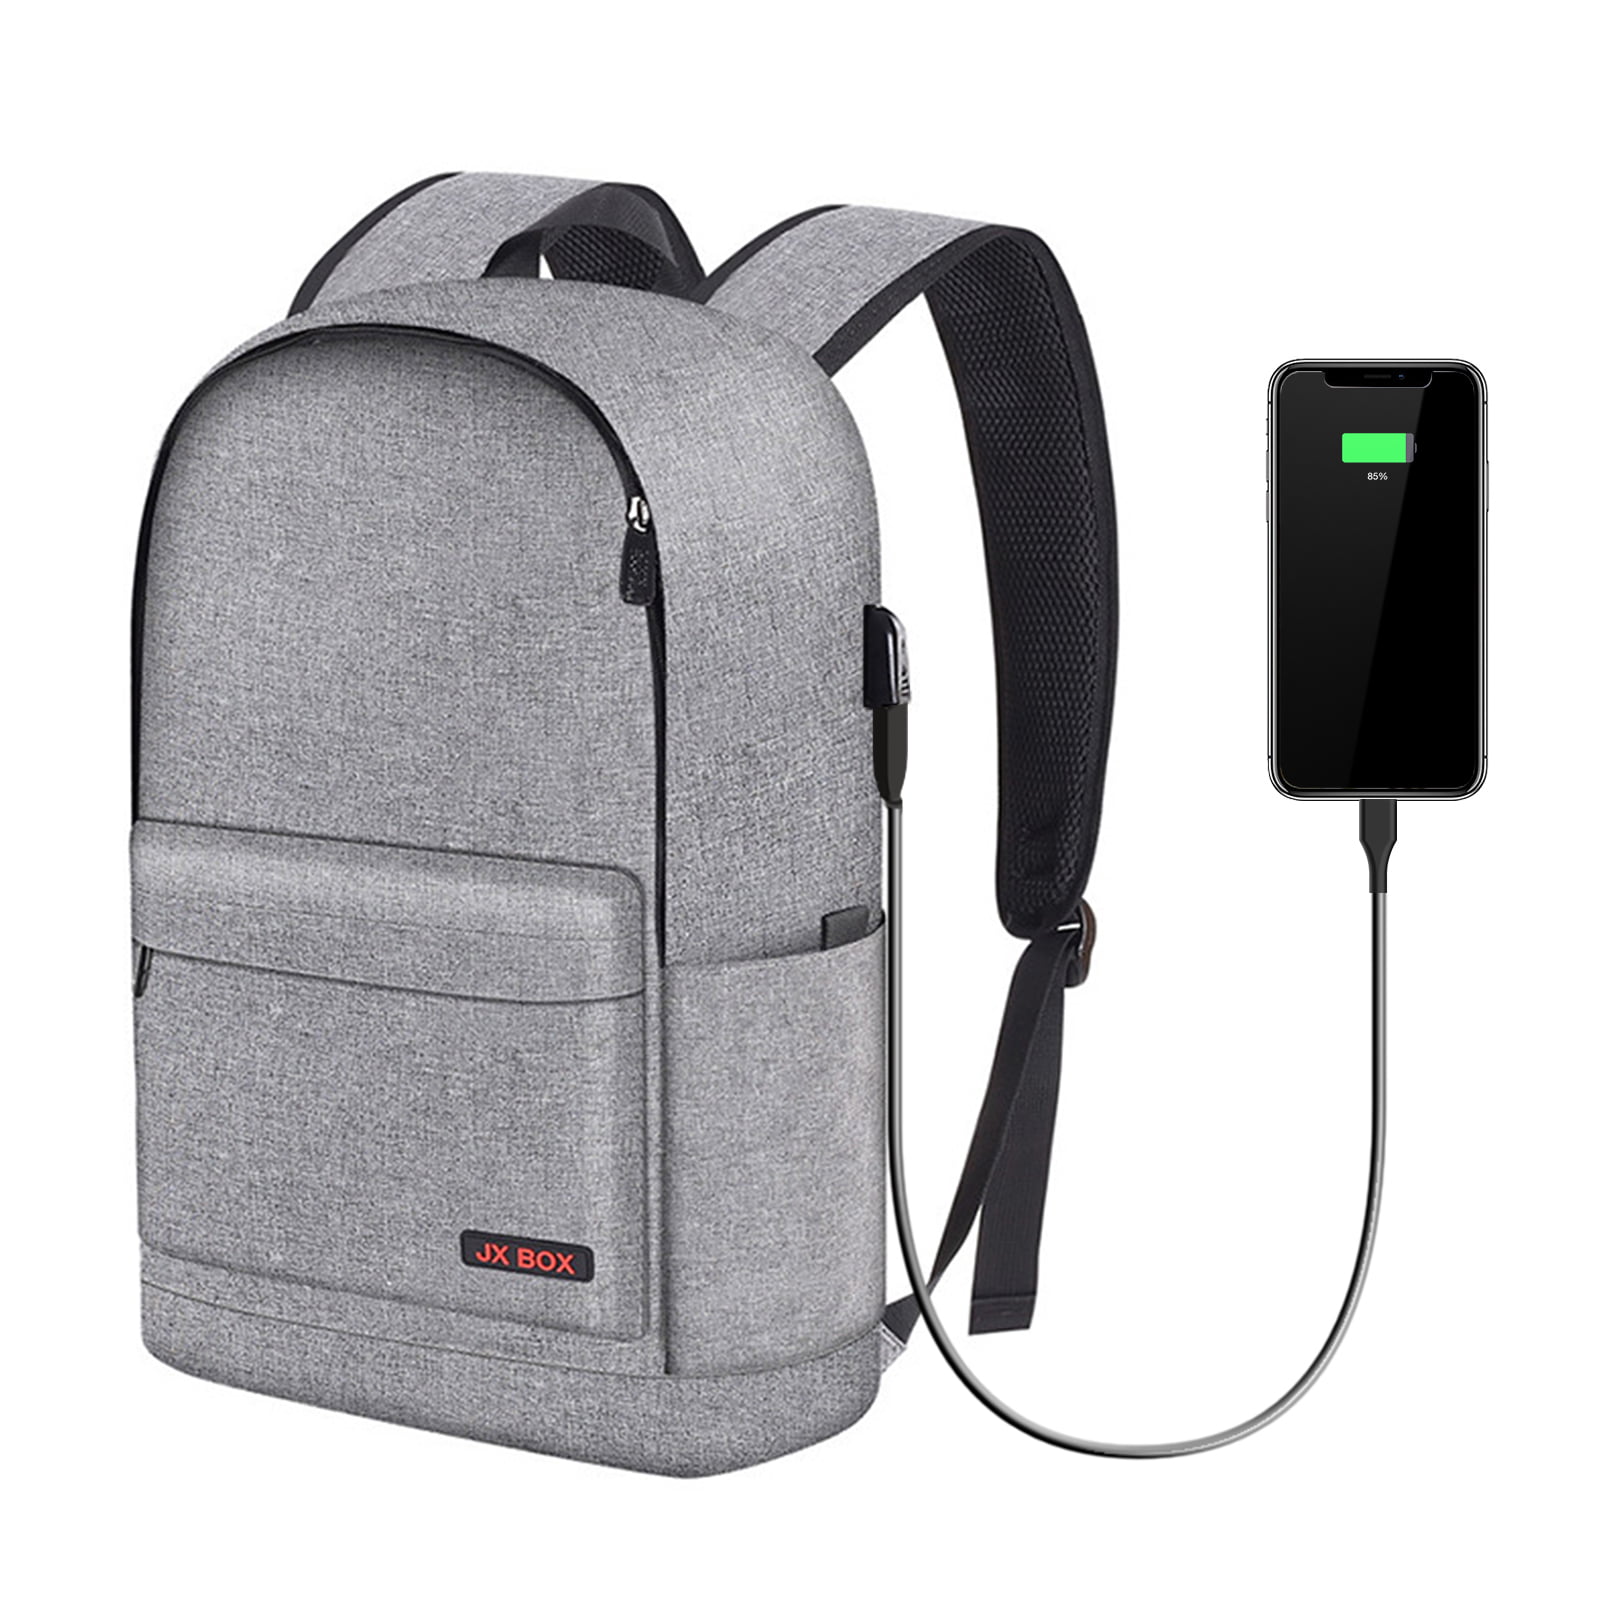 Travel Backpack Business Casual Computer Backpack Ride USB Charging Port Shoulder Bag Schoolbags Color : Light Gray, Size : L 